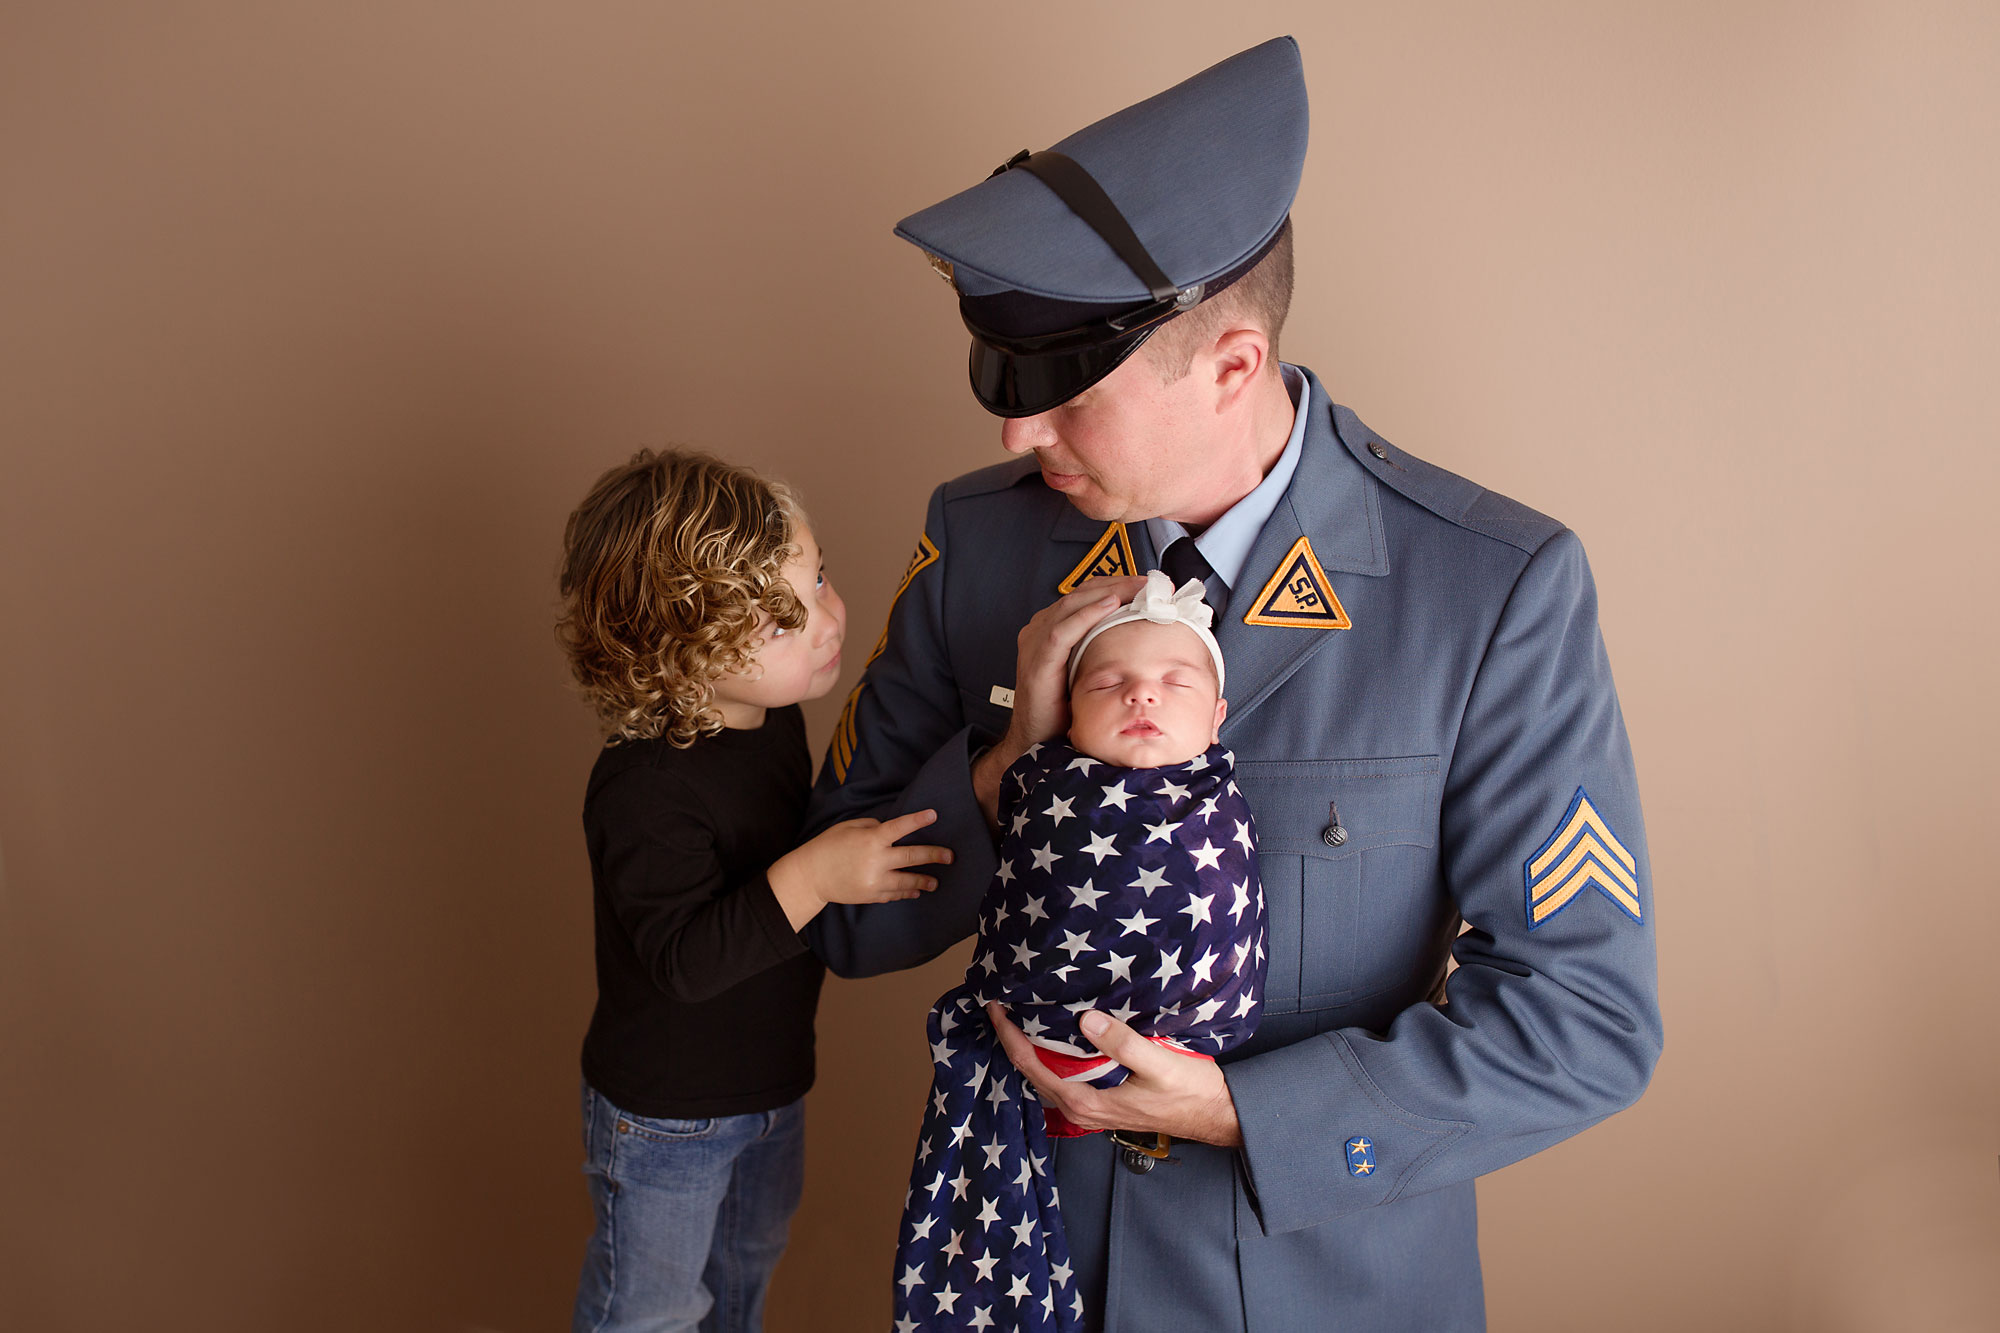 newborn police photography ideas